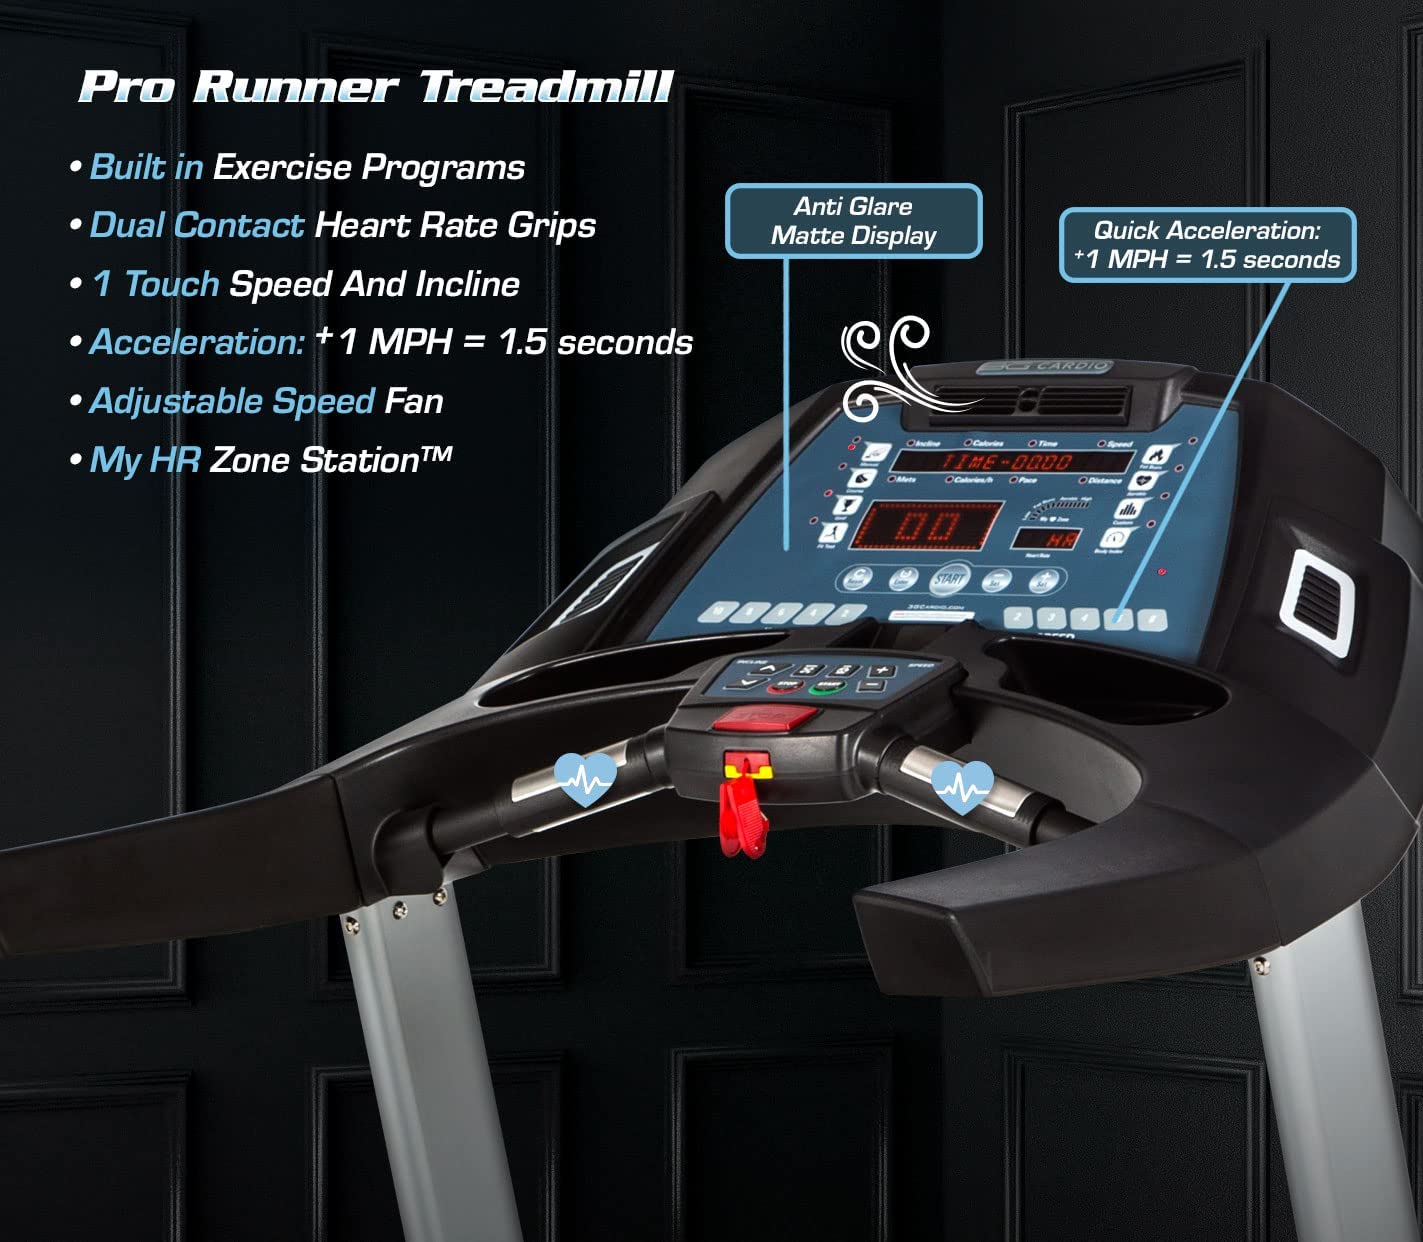 3G Cardio Pro Runner Treadmill display